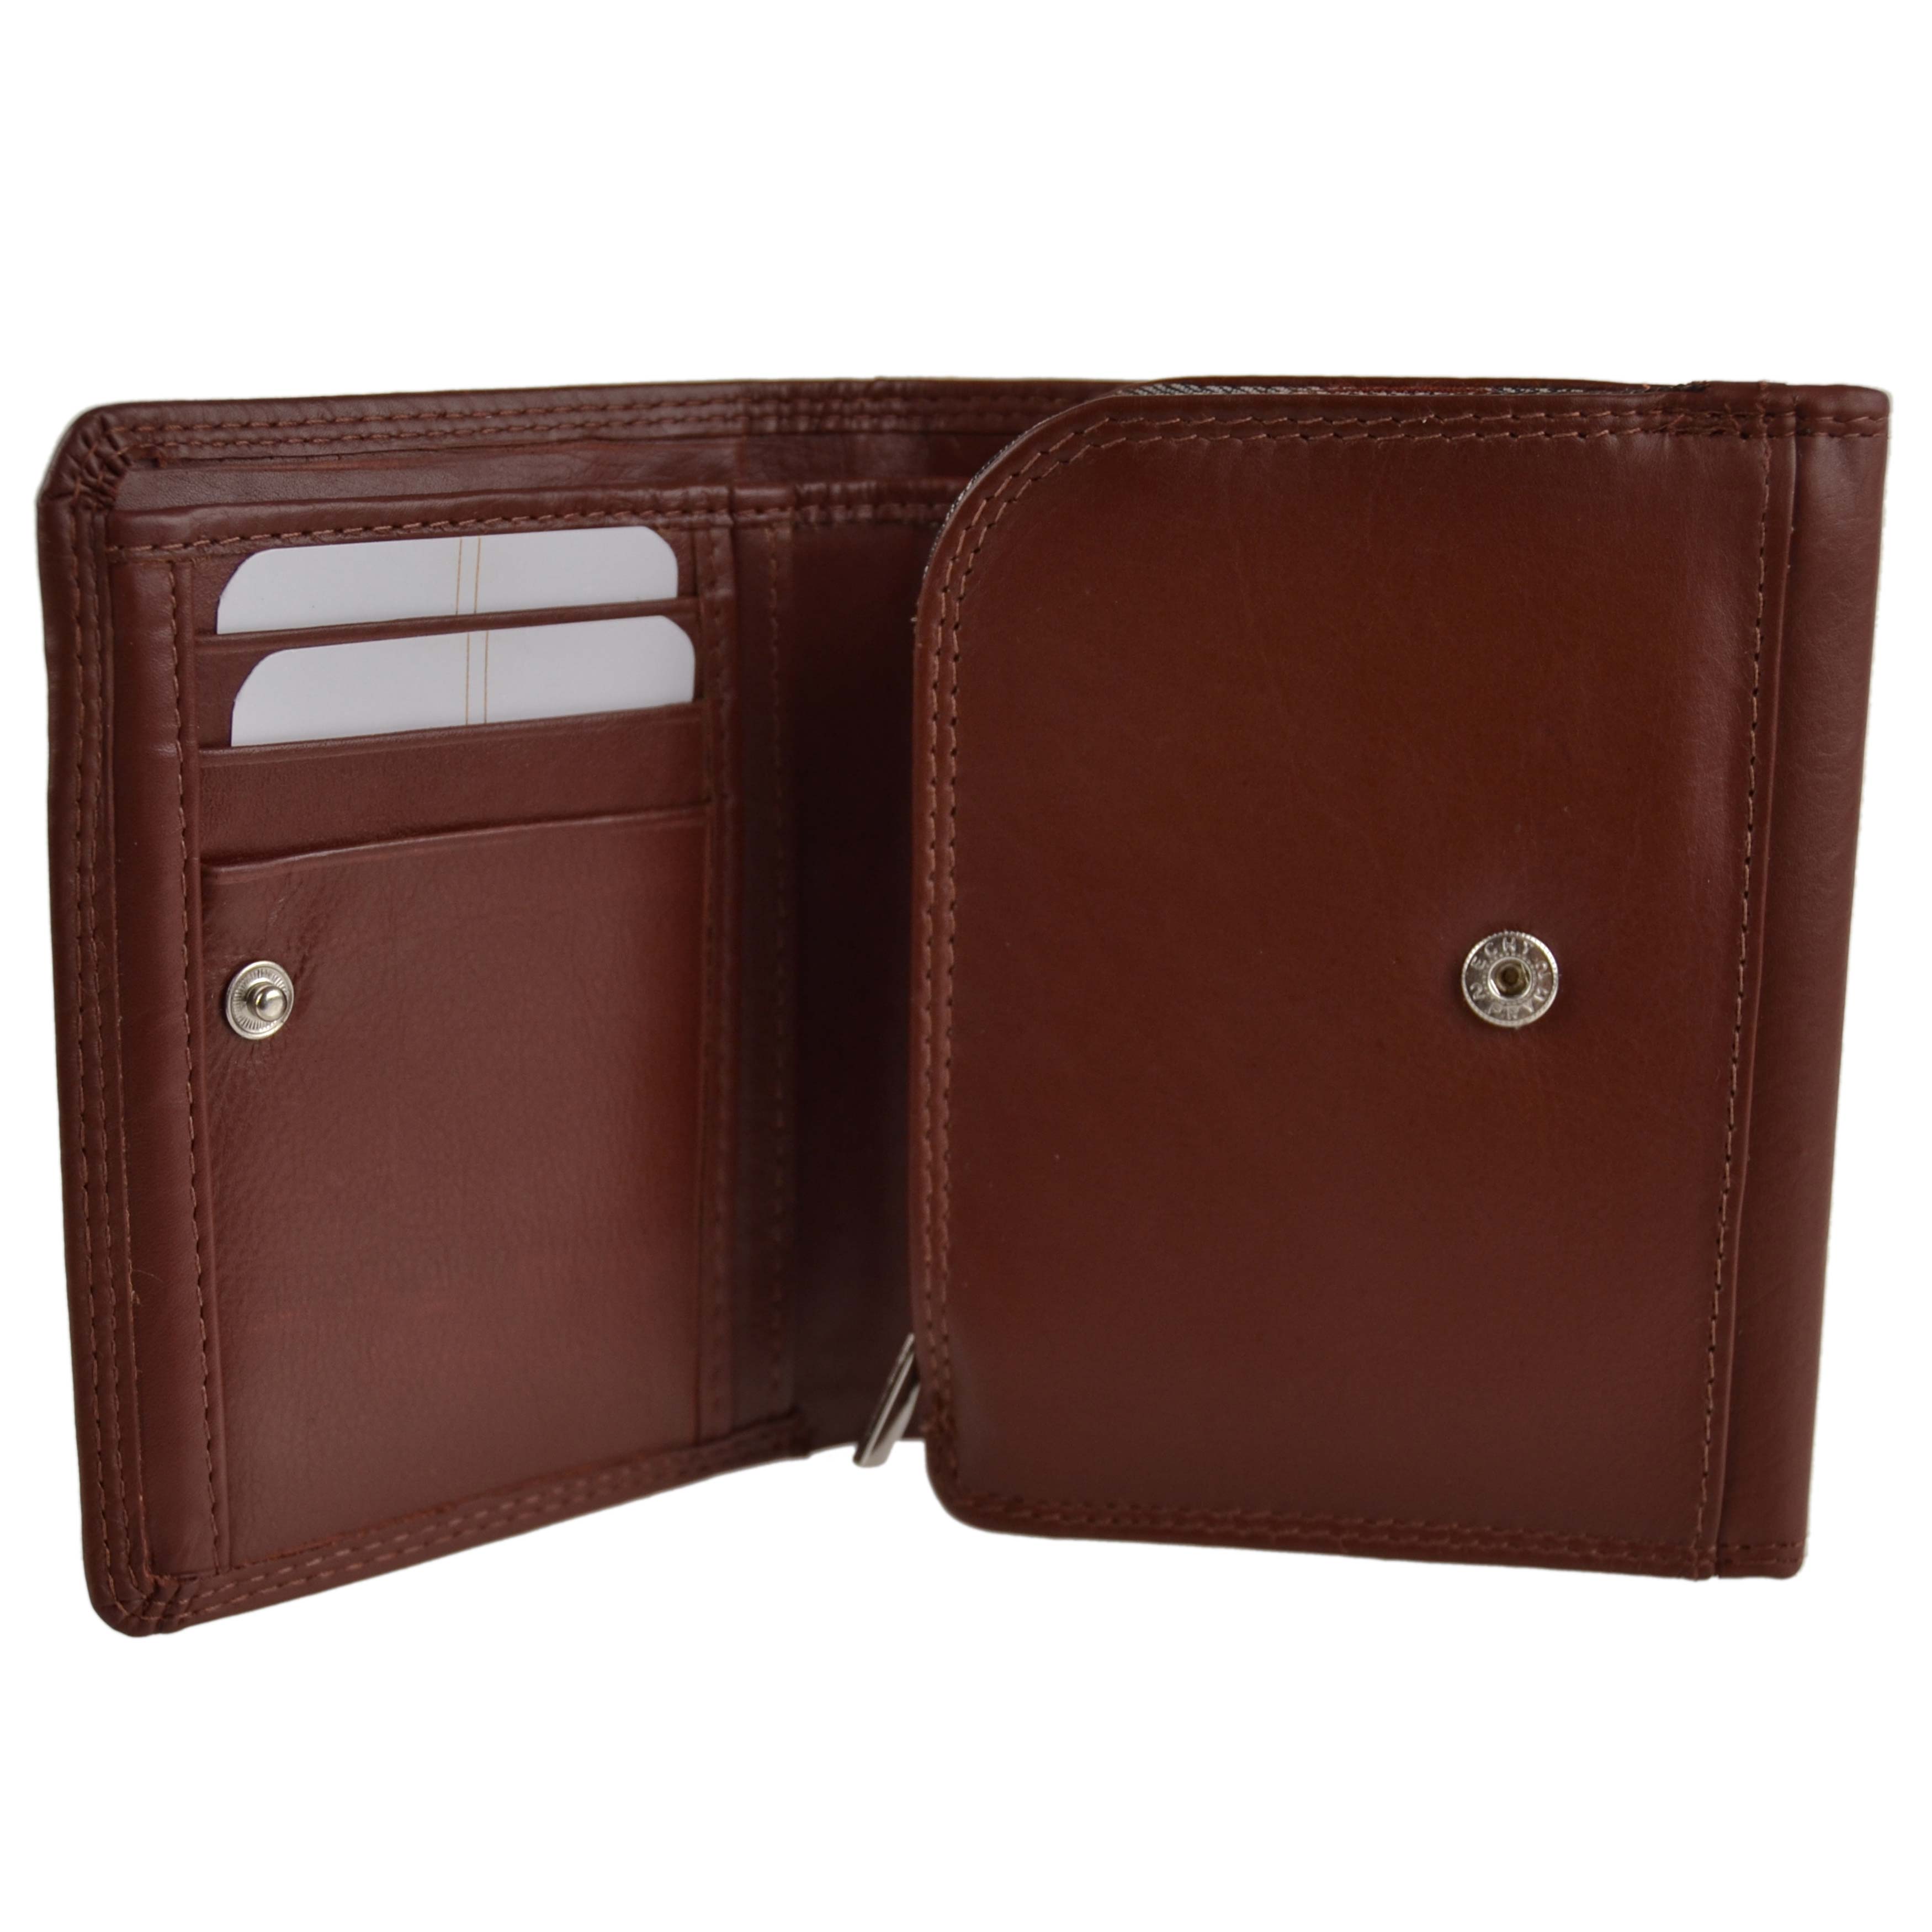 Mens Top Quality Soft Leather Tri-Fold Wallet by London Leathergoods Stylish | eBay